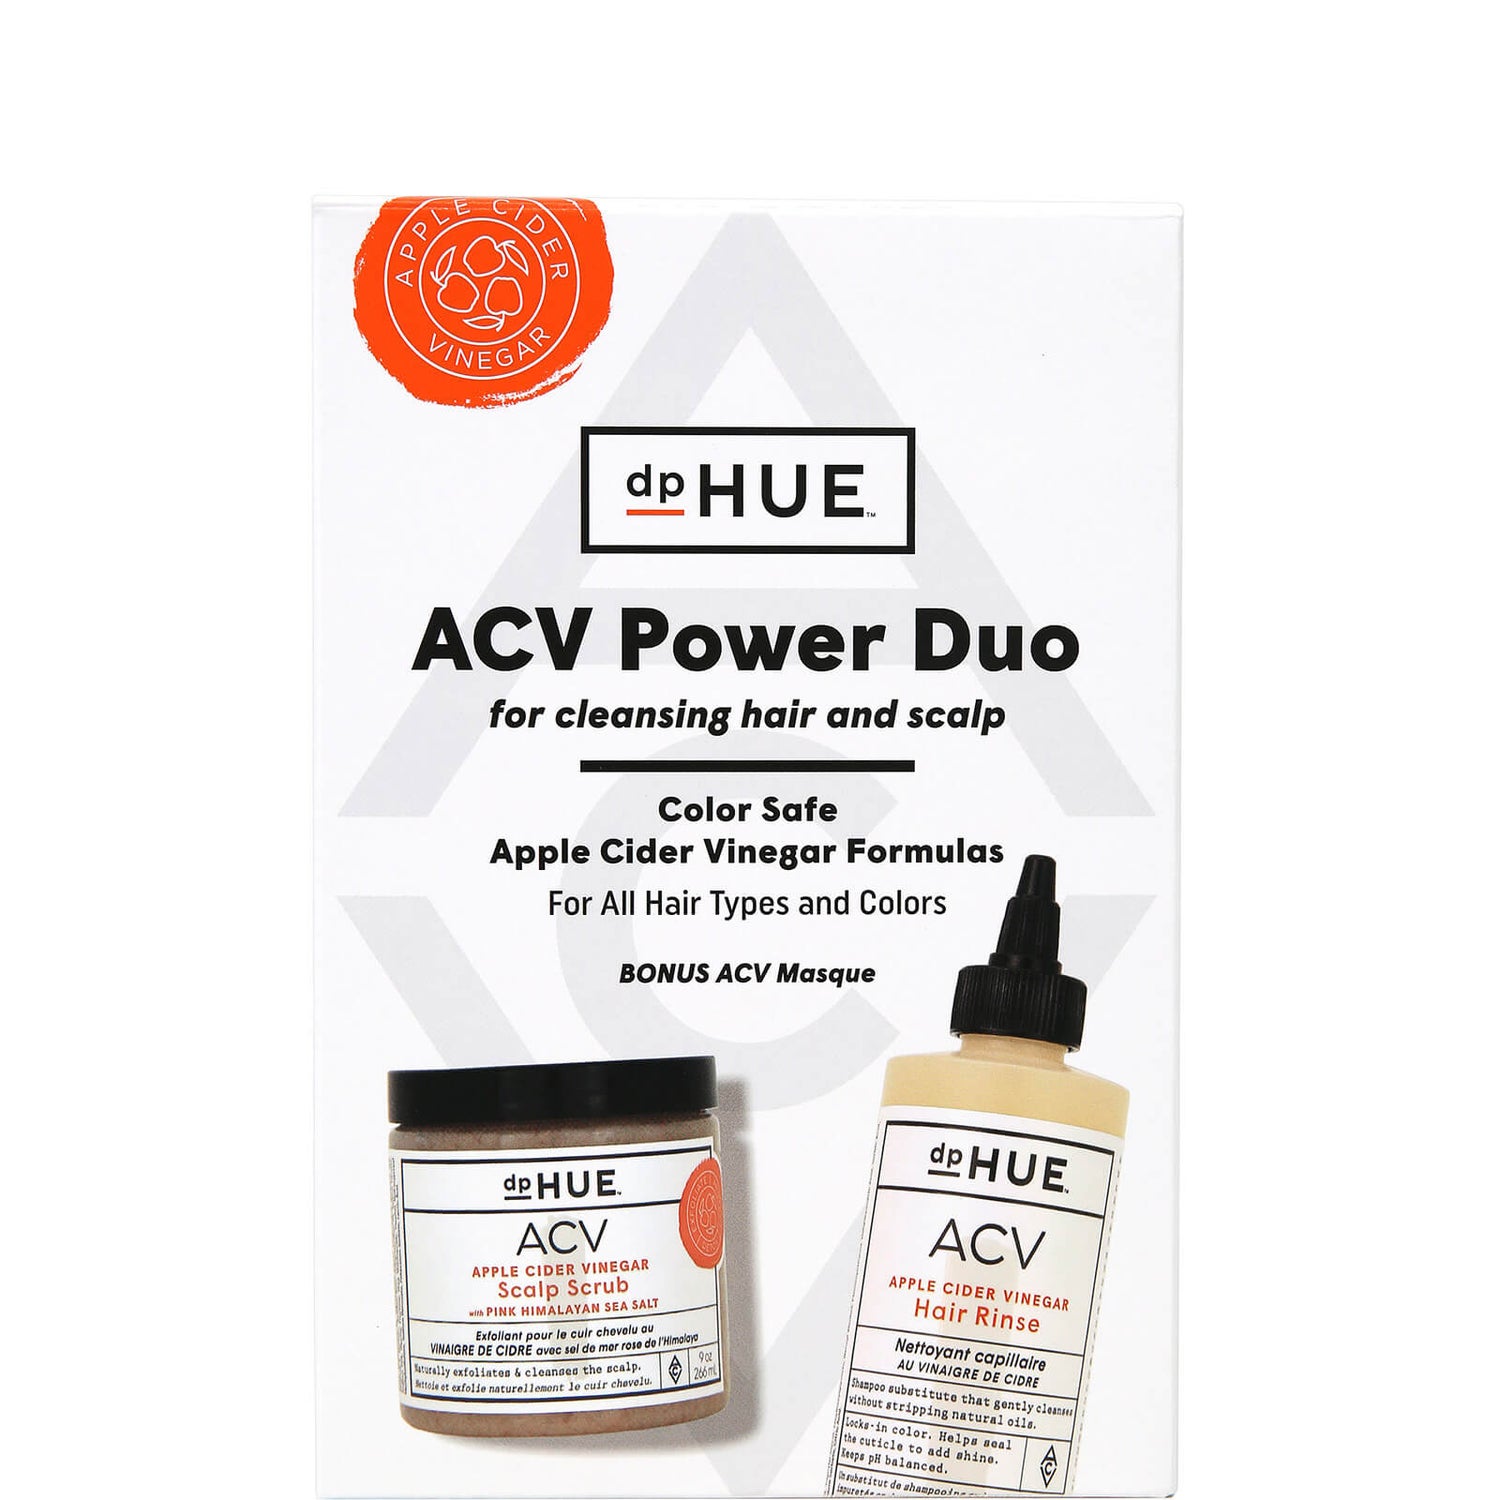 dpHUE ACV Power Duo - Dermstore